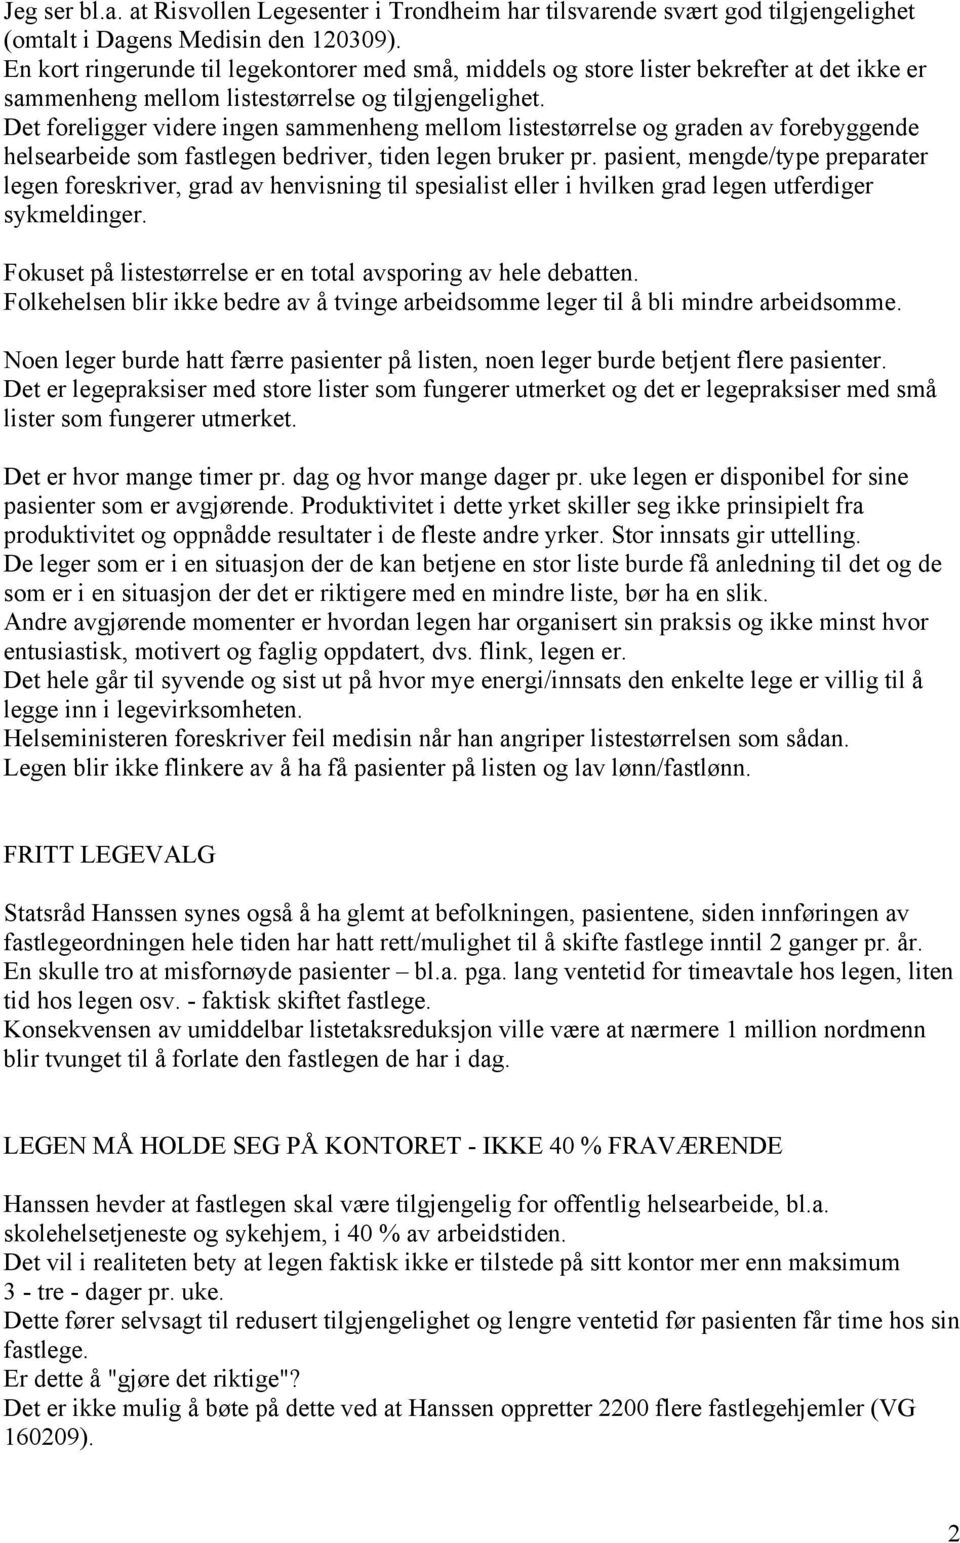 GJØRE DET RIKTIGE. Svein Stiksrud DinLege AS Fr. Stangsgt Oslo Oslo, - PDF  Free Download